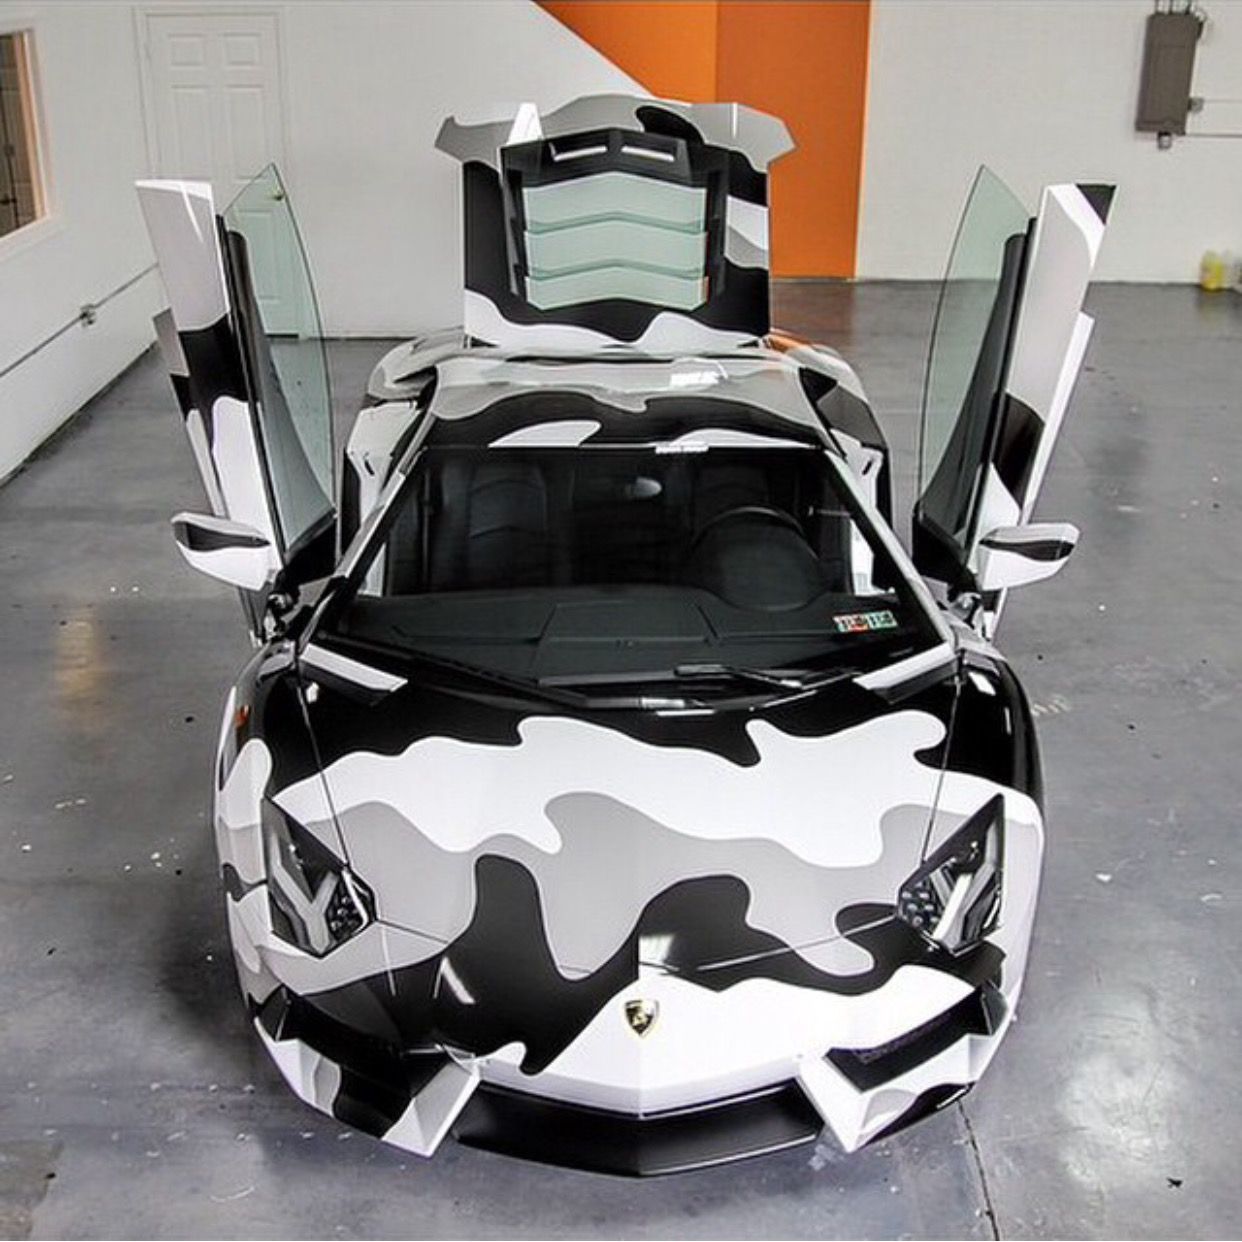 Lamborghini Aventador Coupe wrapped in Black, White & Gray camo Photo taken by: on Instagram. Camo car, Super cars, Camo wraps